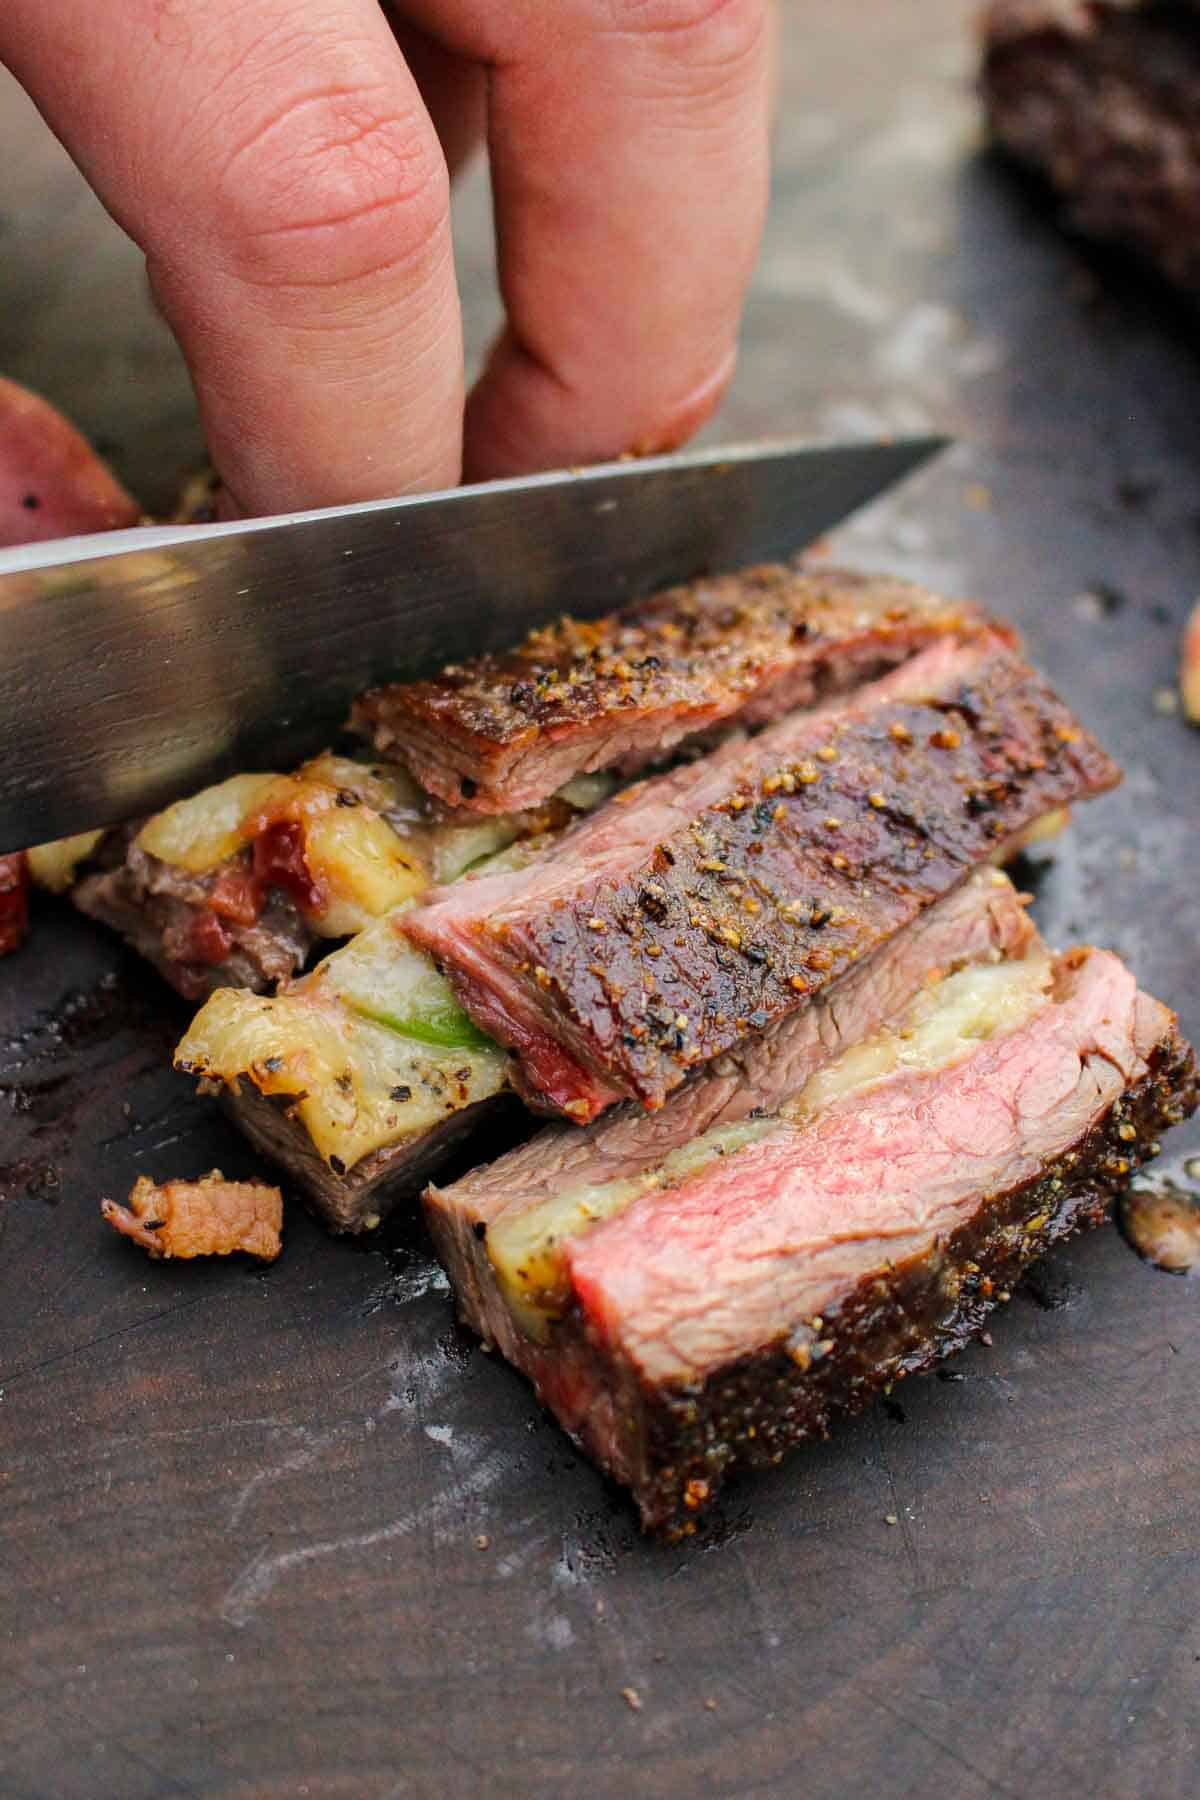 Slicing the steak against the grain